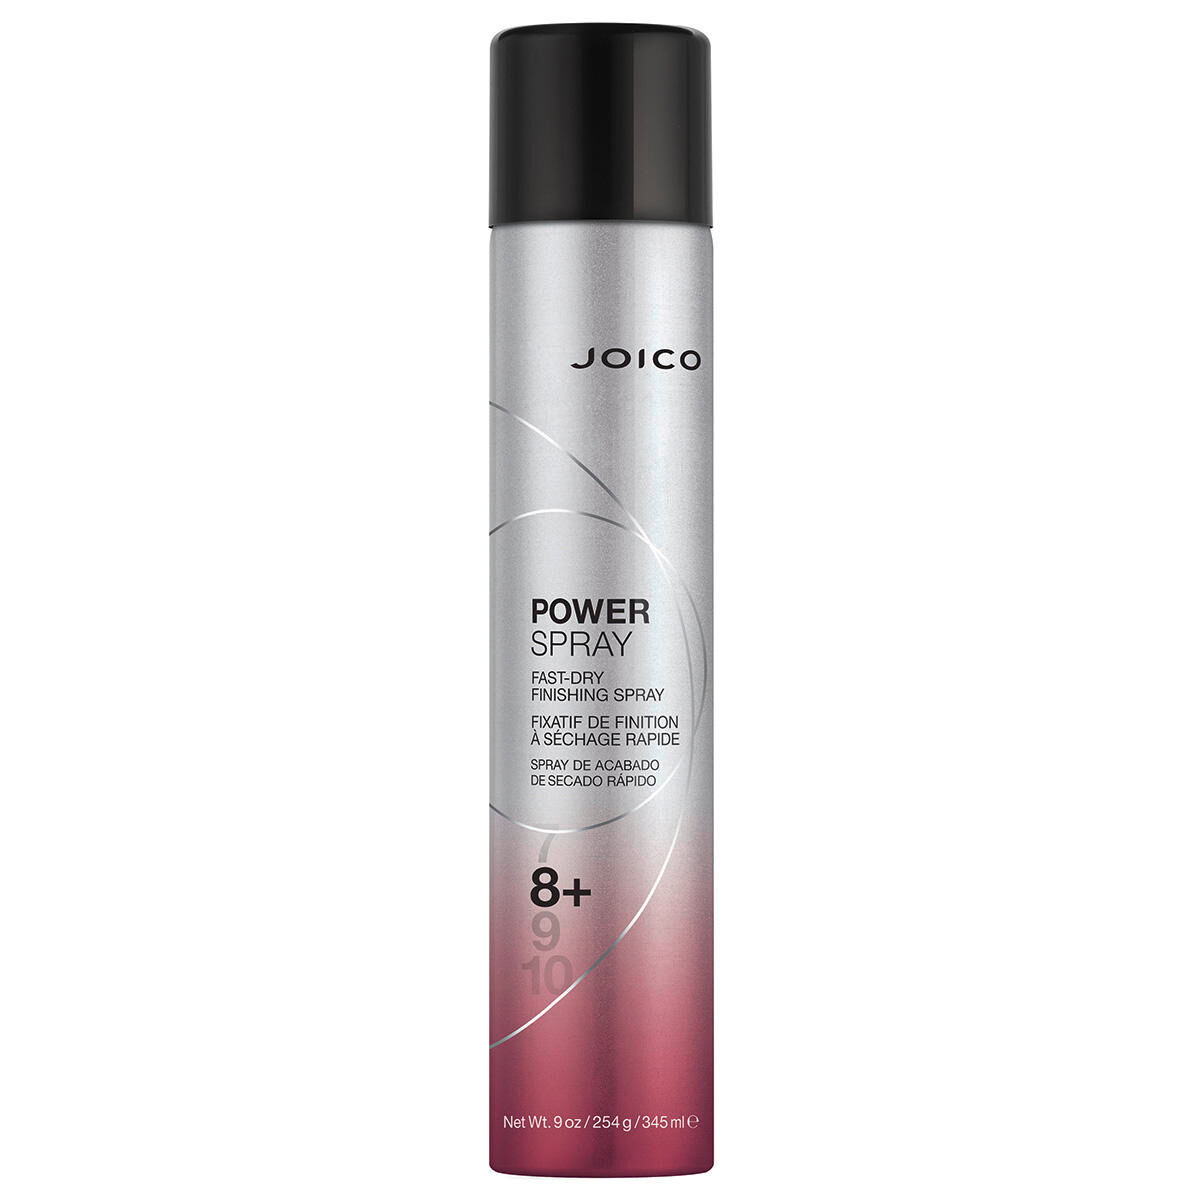 Joico Power Spray Finishing Spray 345 ml